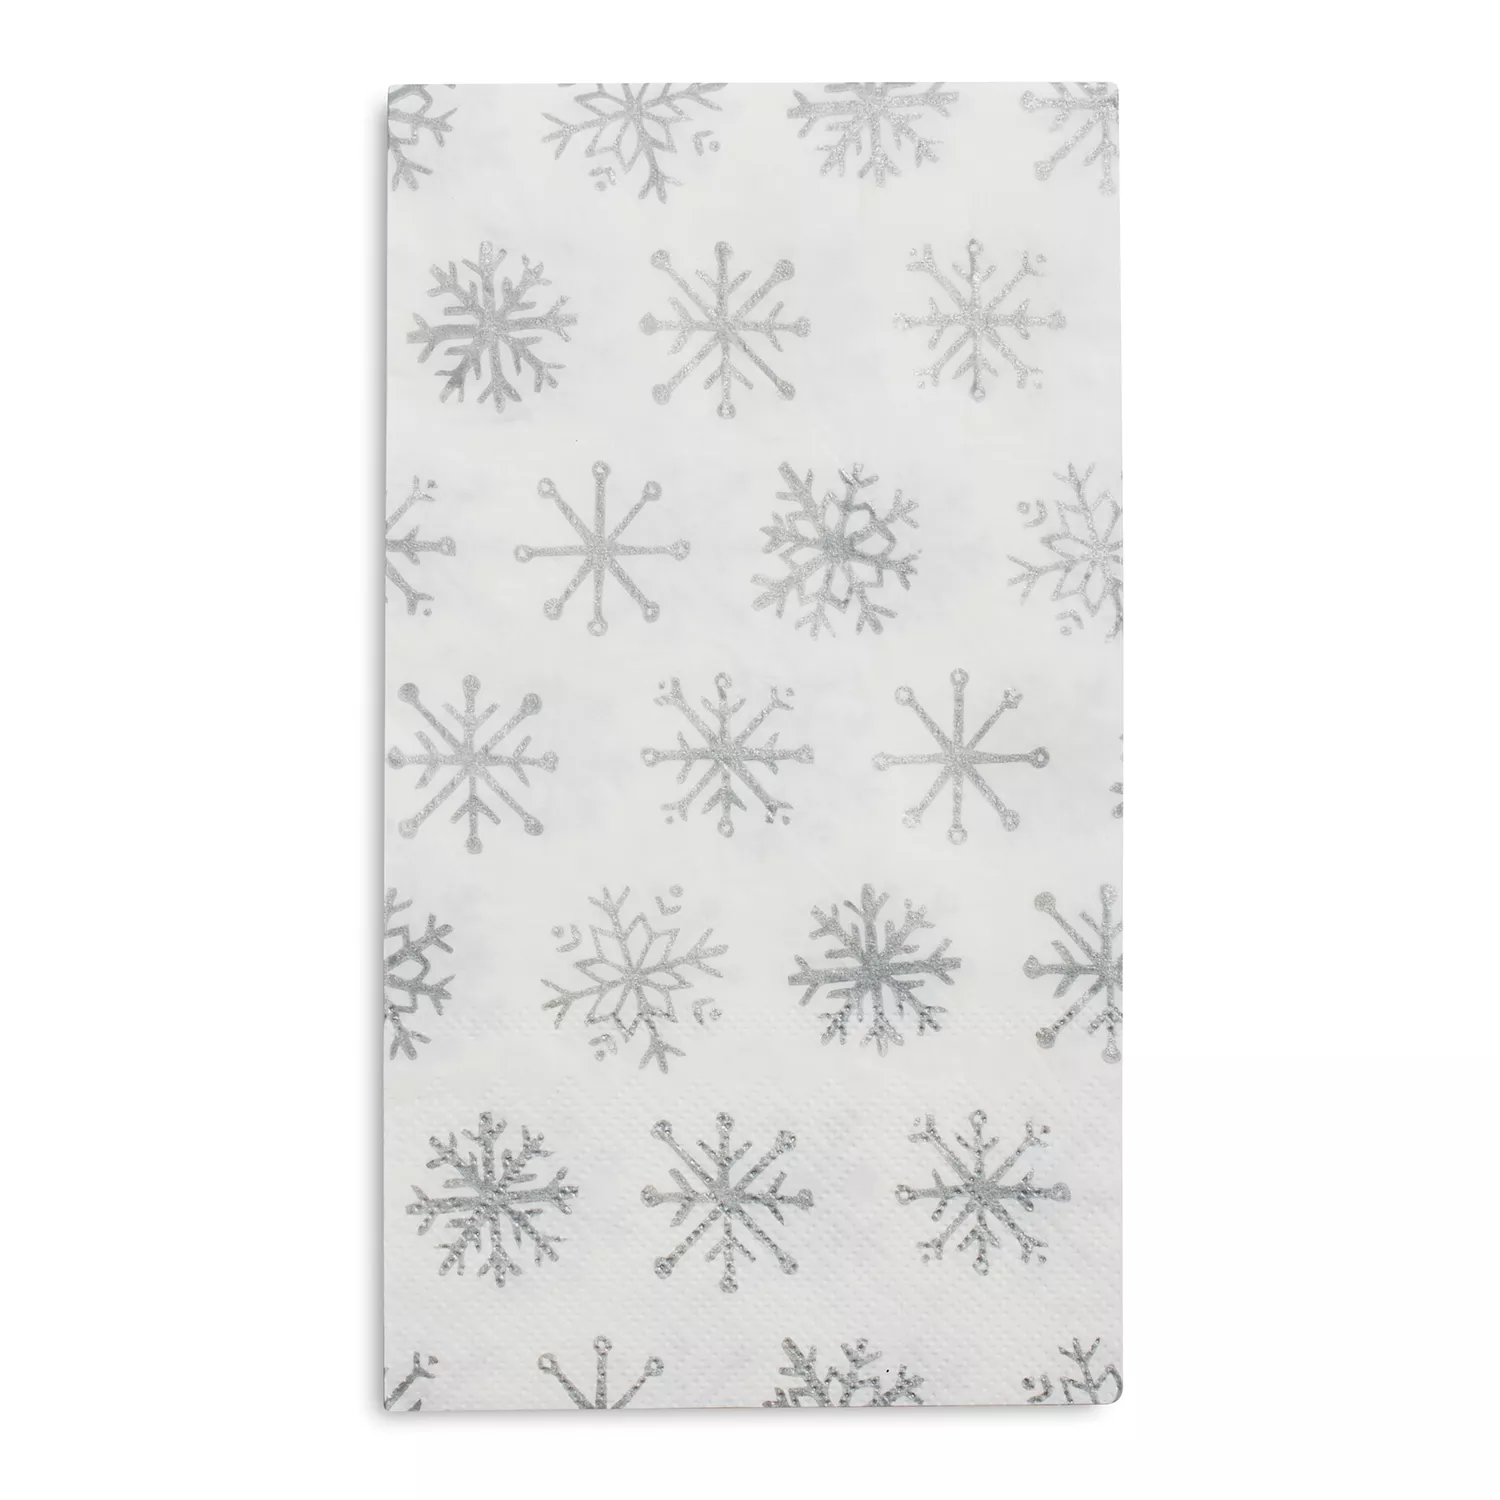 Snowflake Paper Guest Napkins, Set of 20